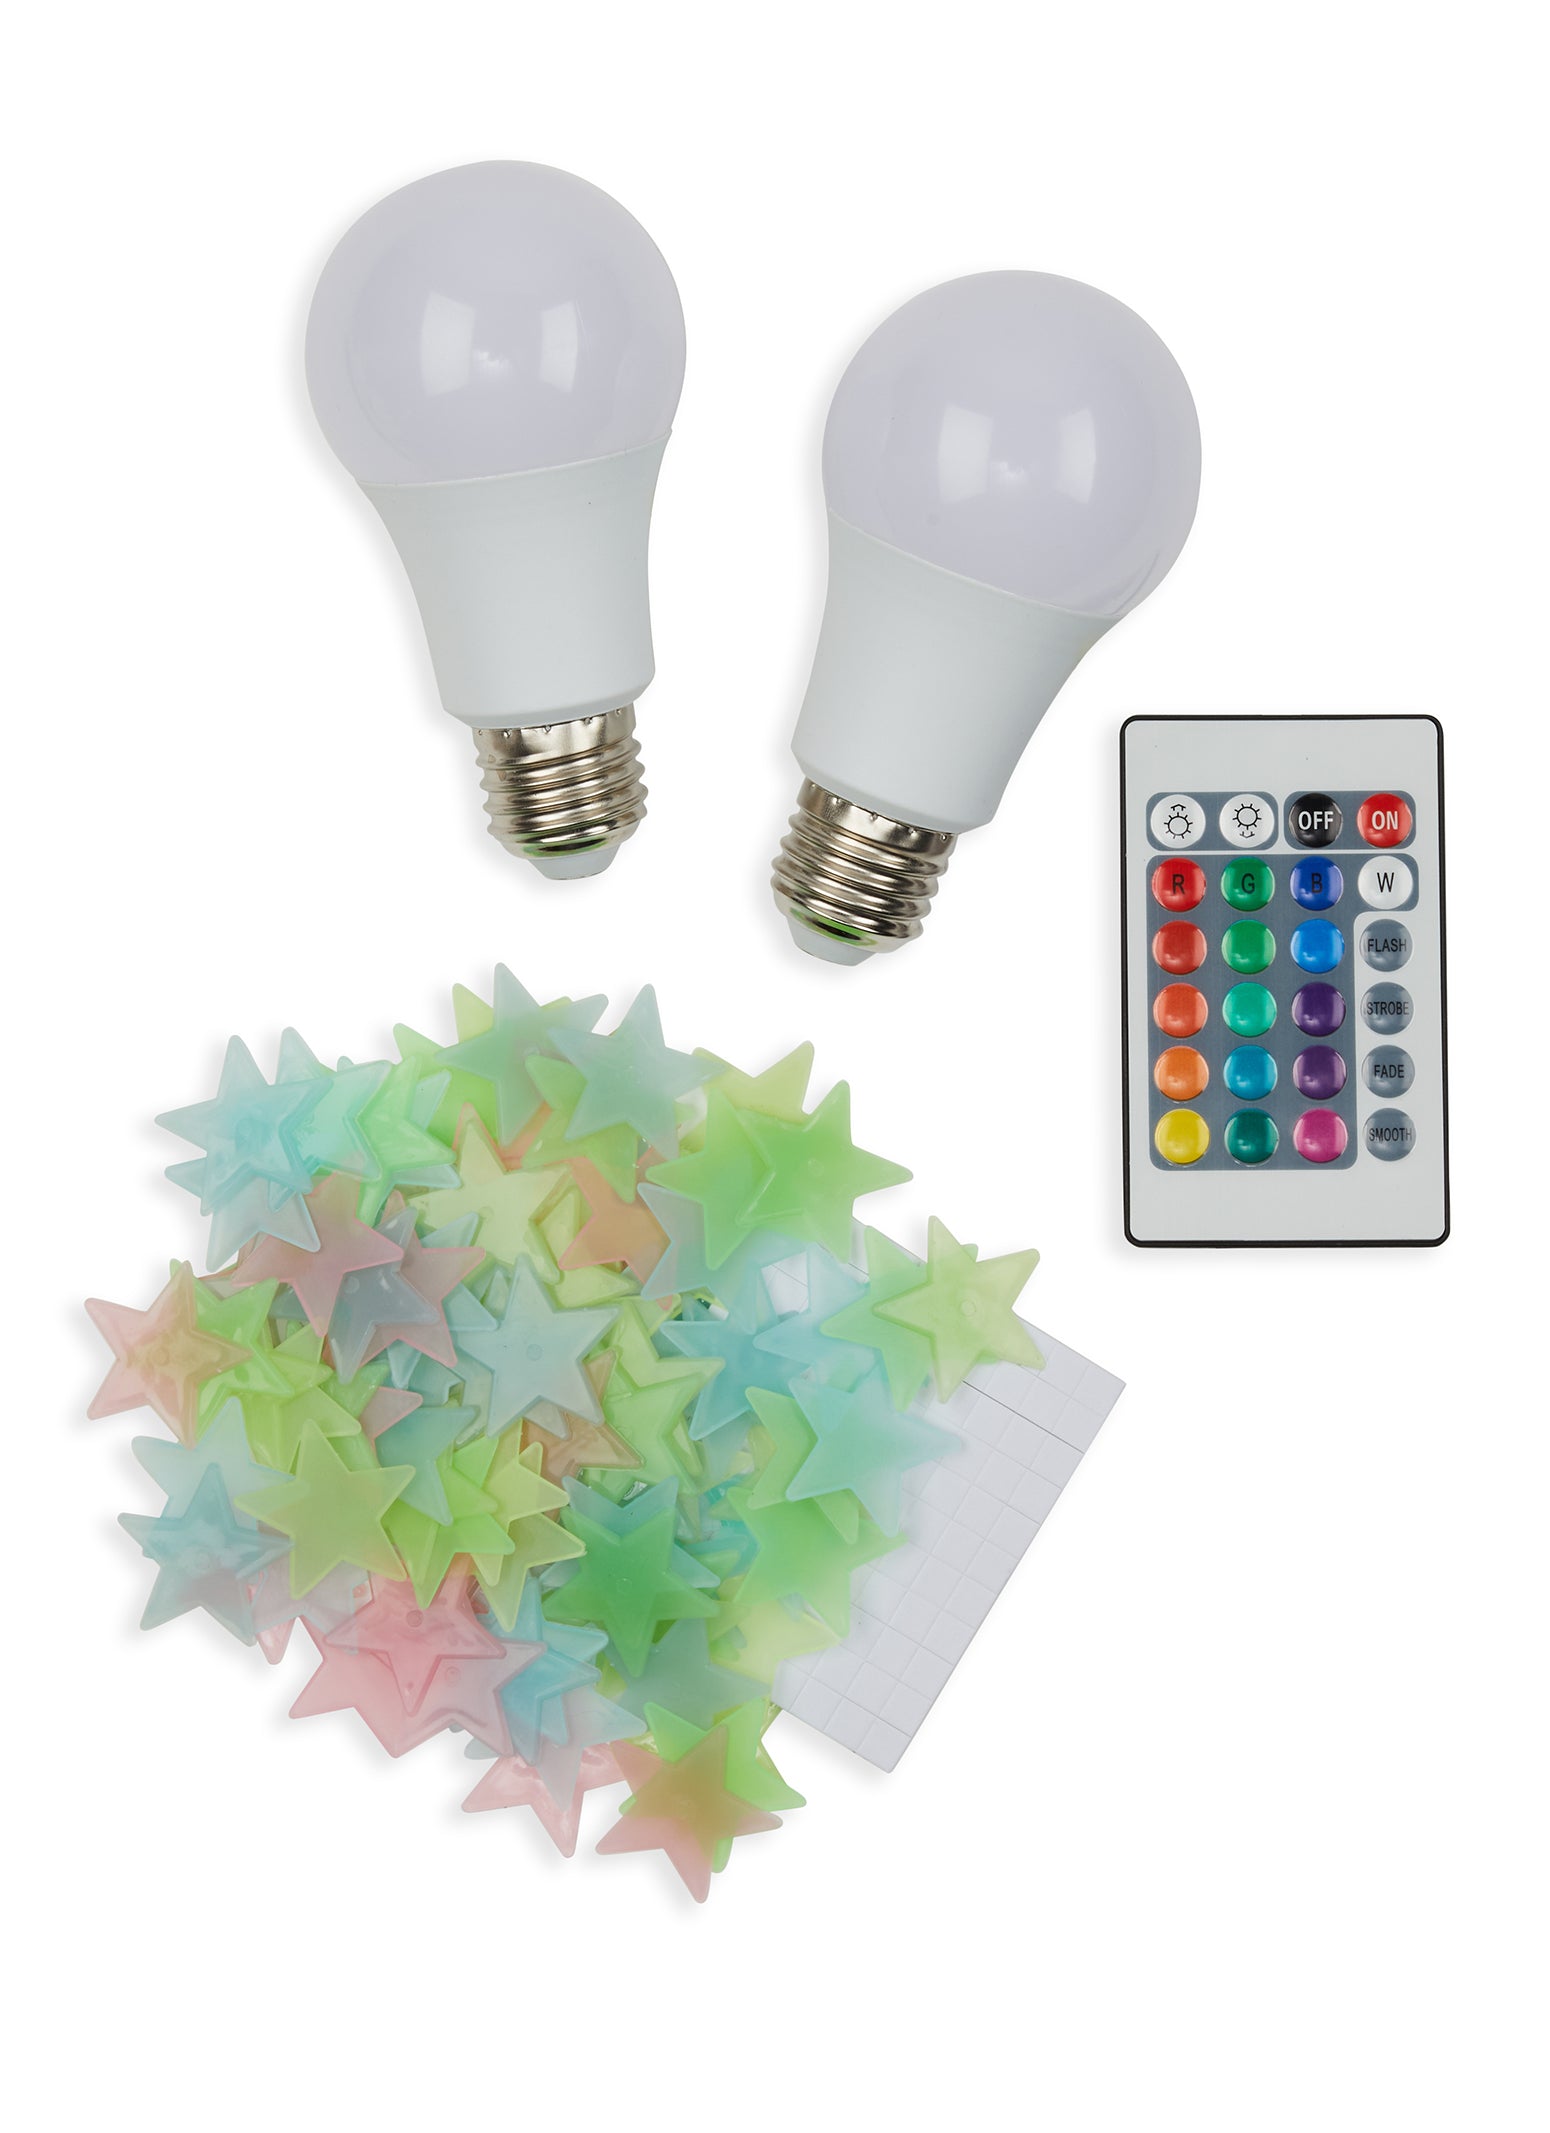 2 Color Changing Light Bulbs